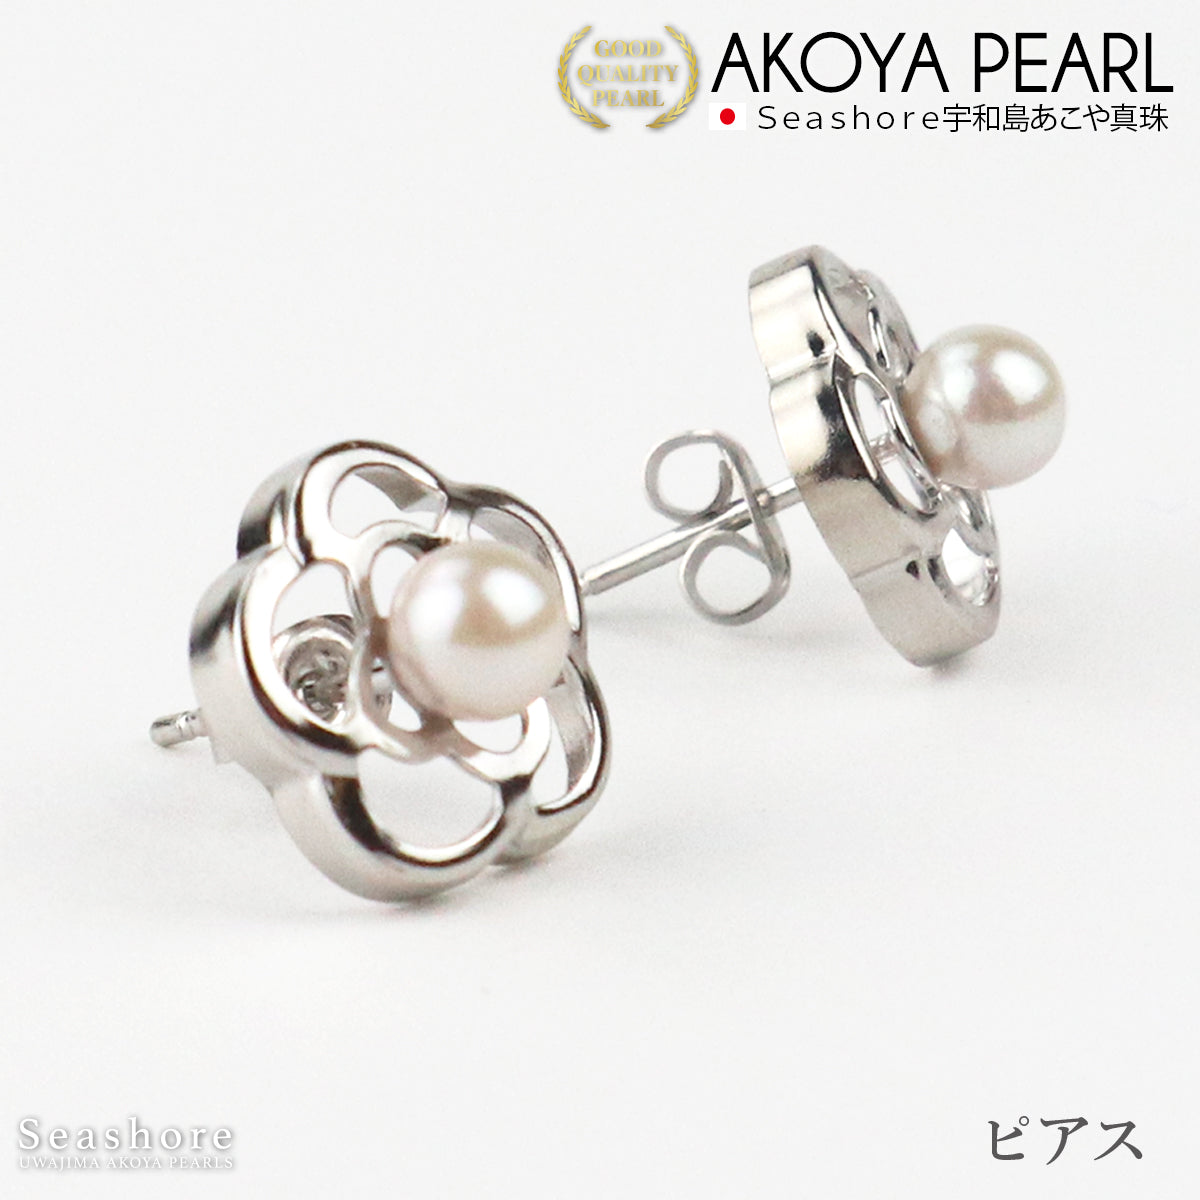 Akoya Pearl Pearl Earrings Flower Motif Stud Type White [4.0-5.0mm] SV925 Silver